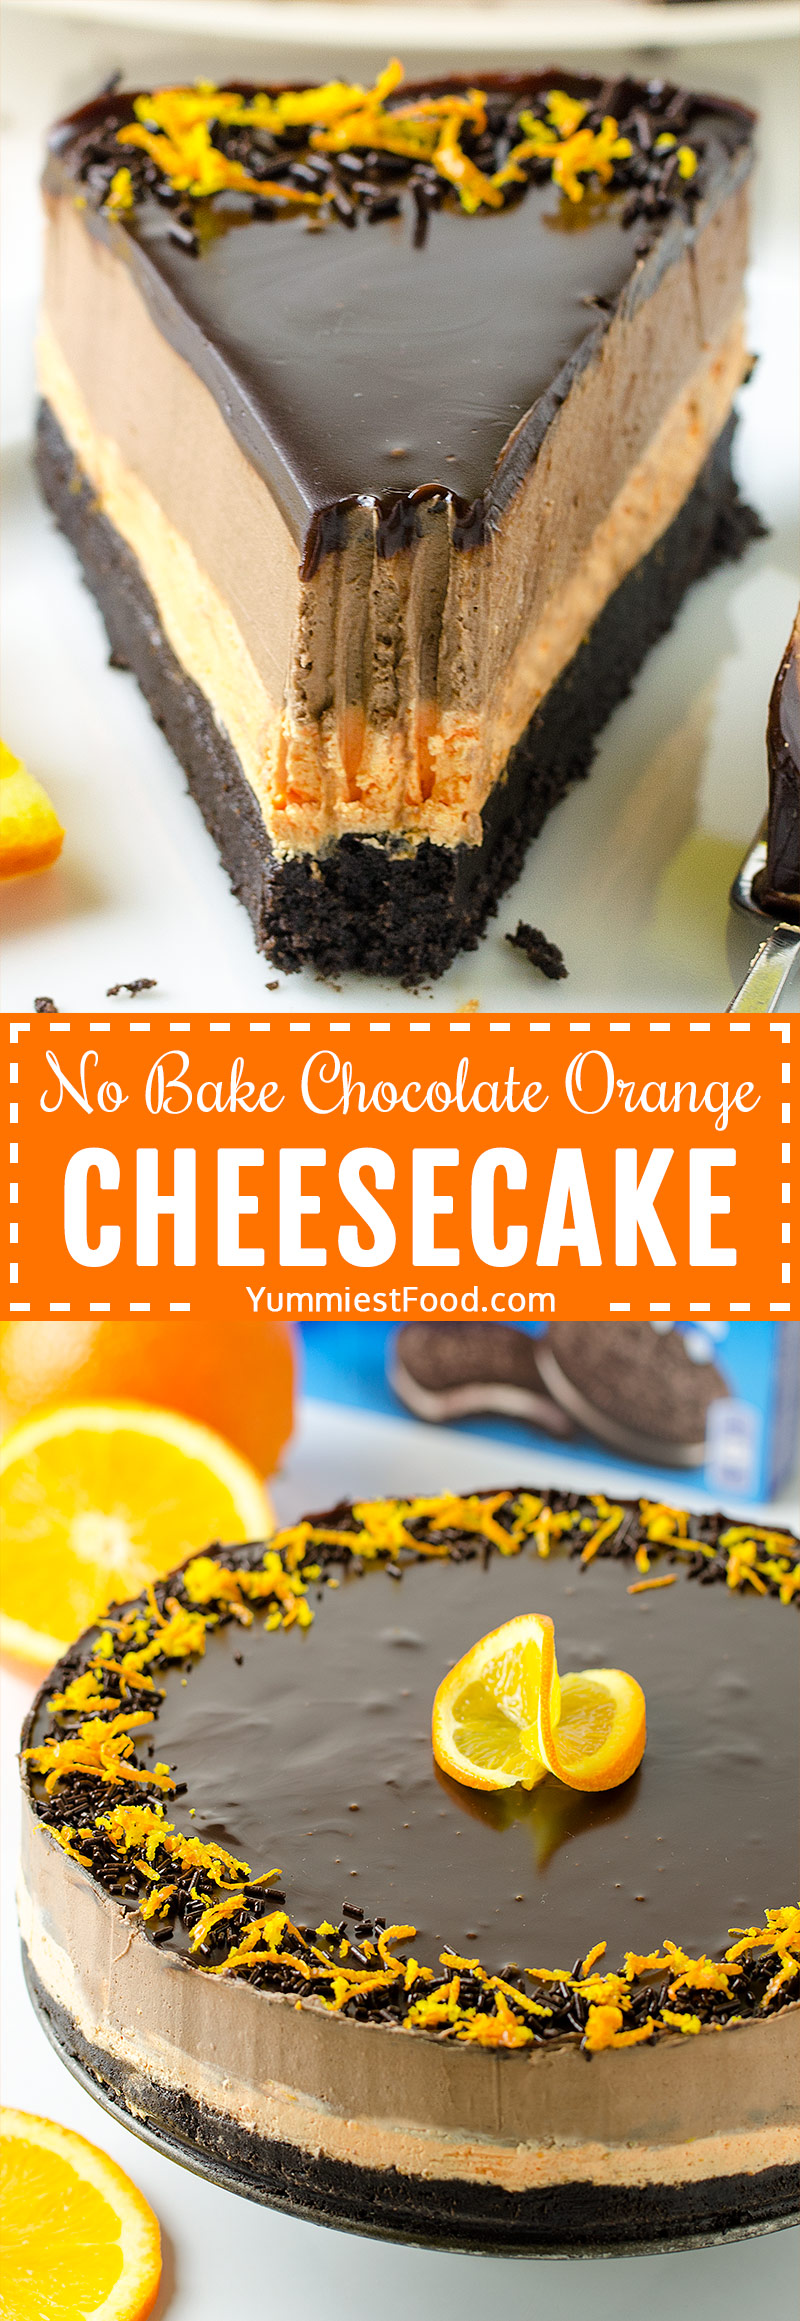 NO BAKE CHOCOLATE ORANGE CHEESECAKE - rich, moist and flavorful cheesecake